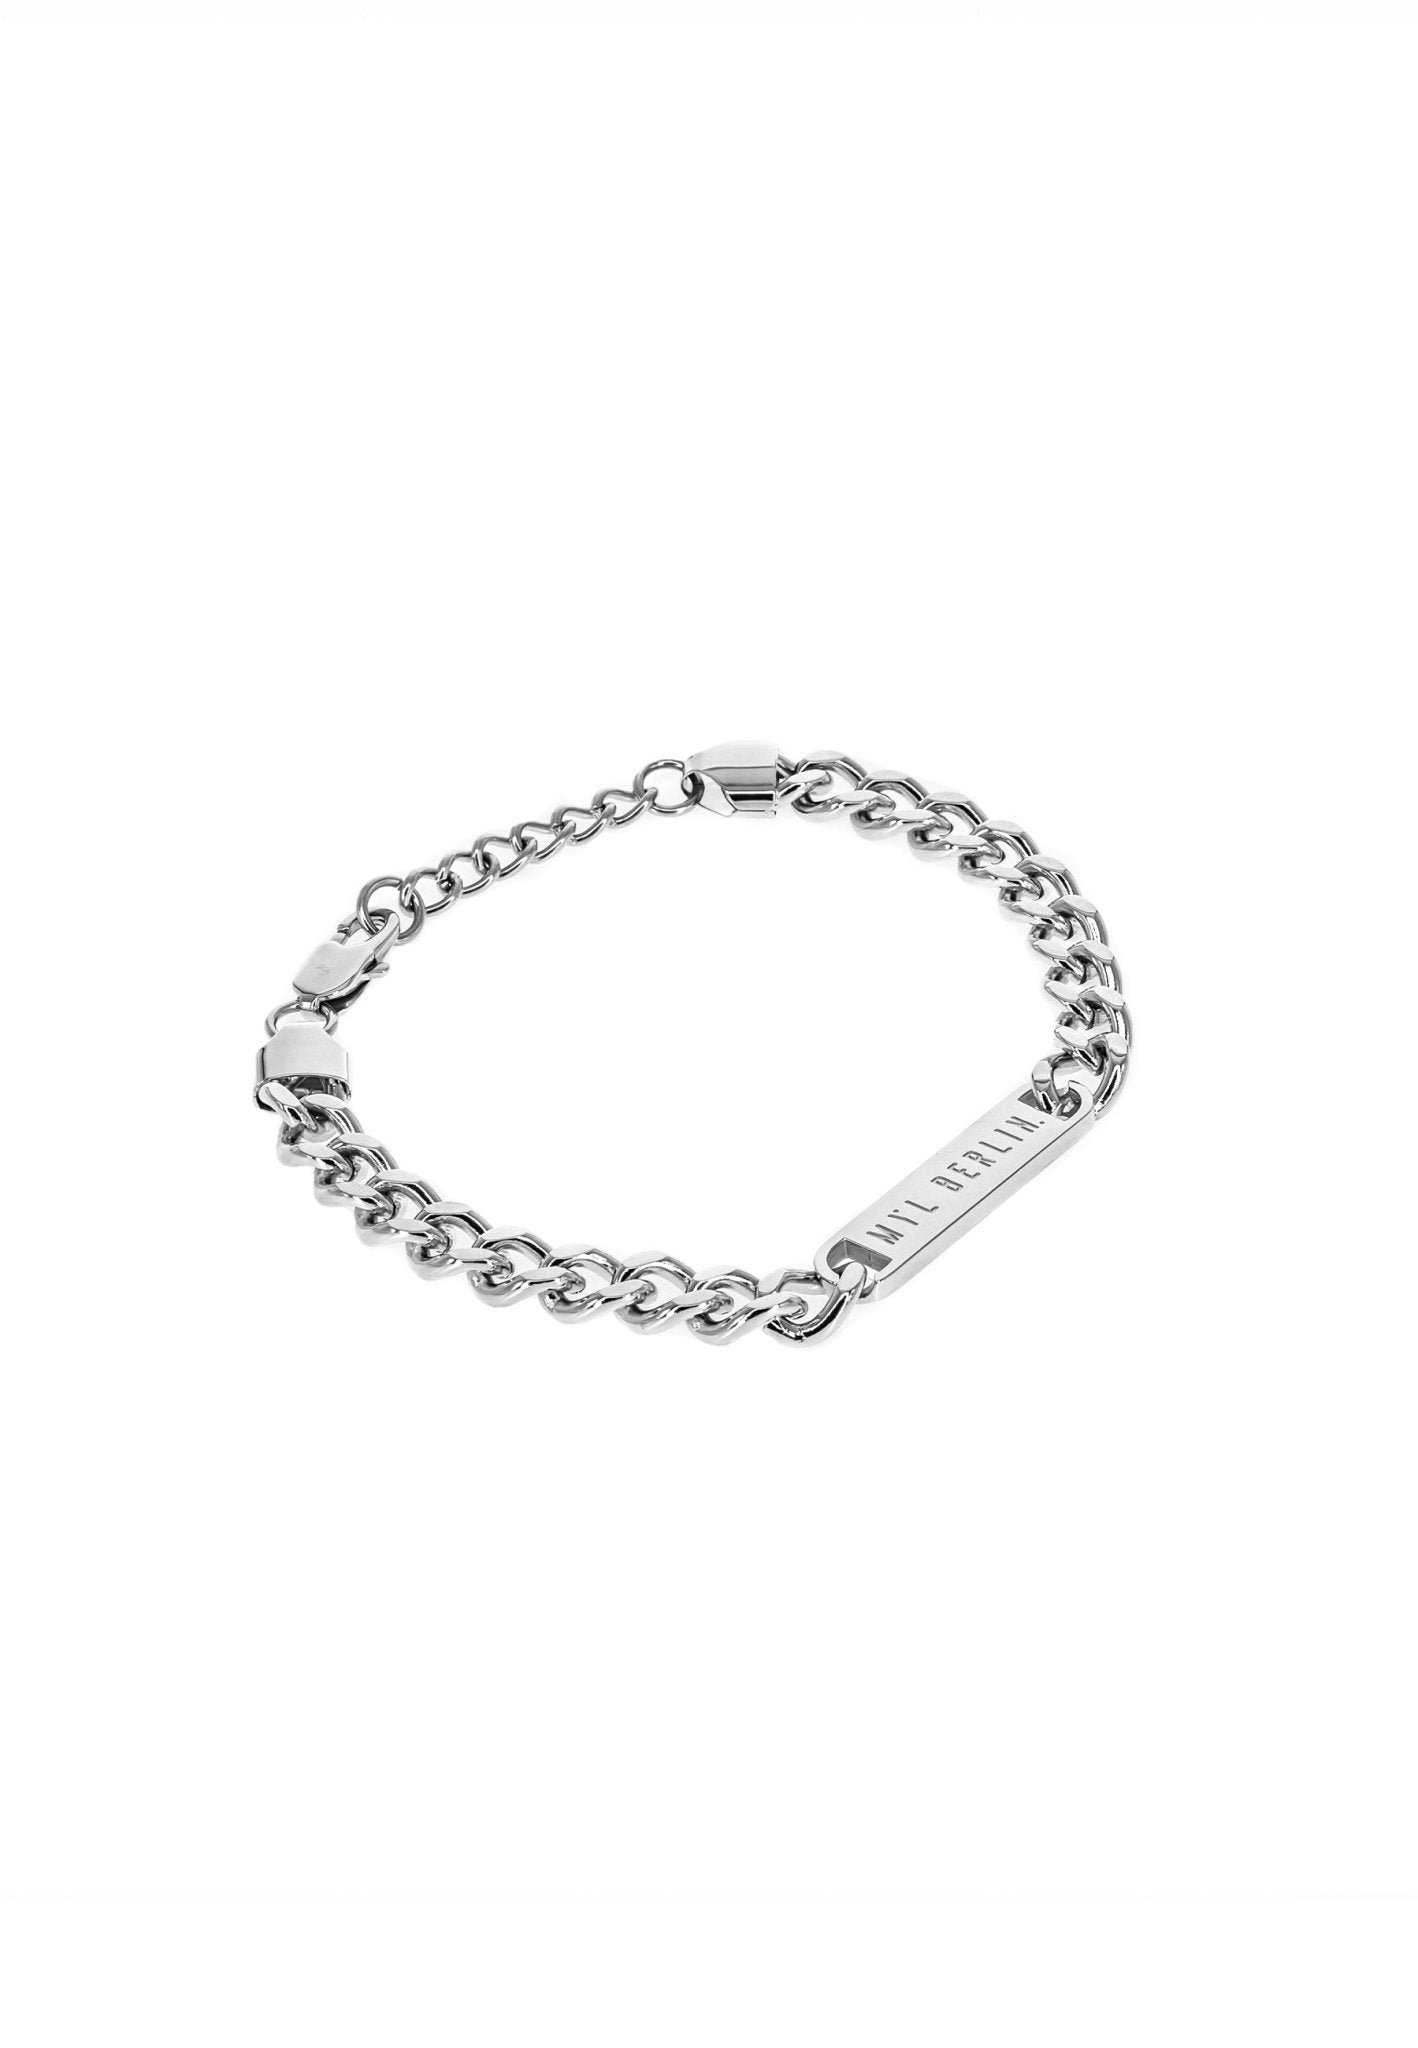 Thick Curb Chain Bracelet "Berlin" - MYL BERLIN - 4260654112719 - 4260654112719